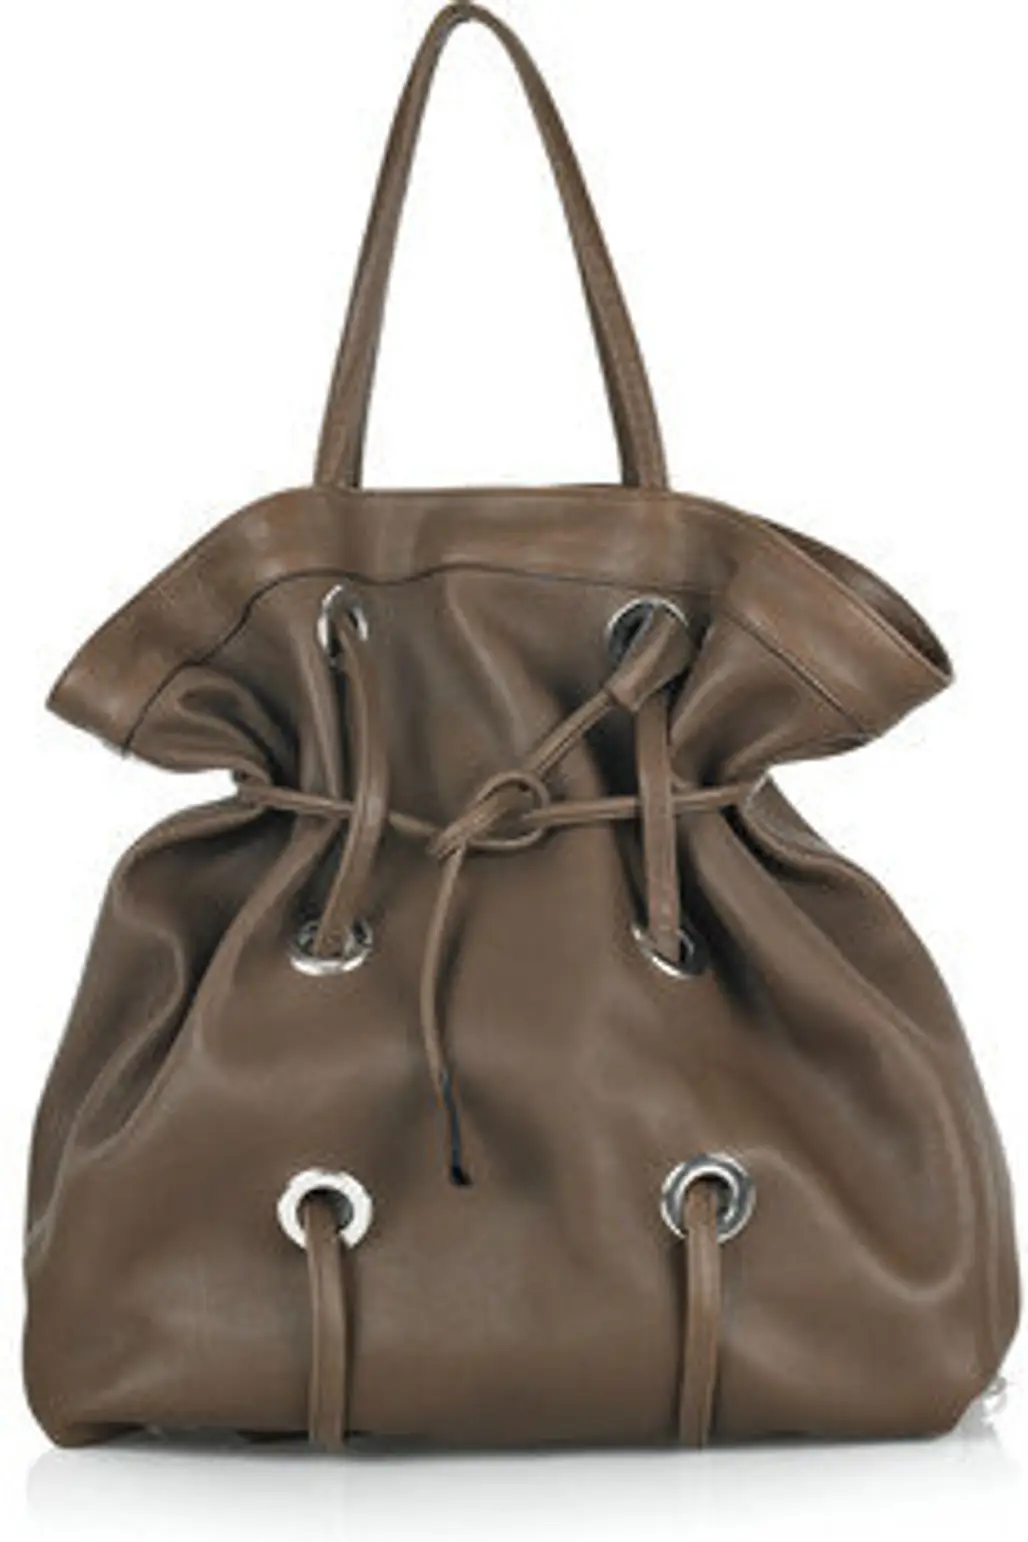 1. Marni Leather Pouch Shoulder Bag